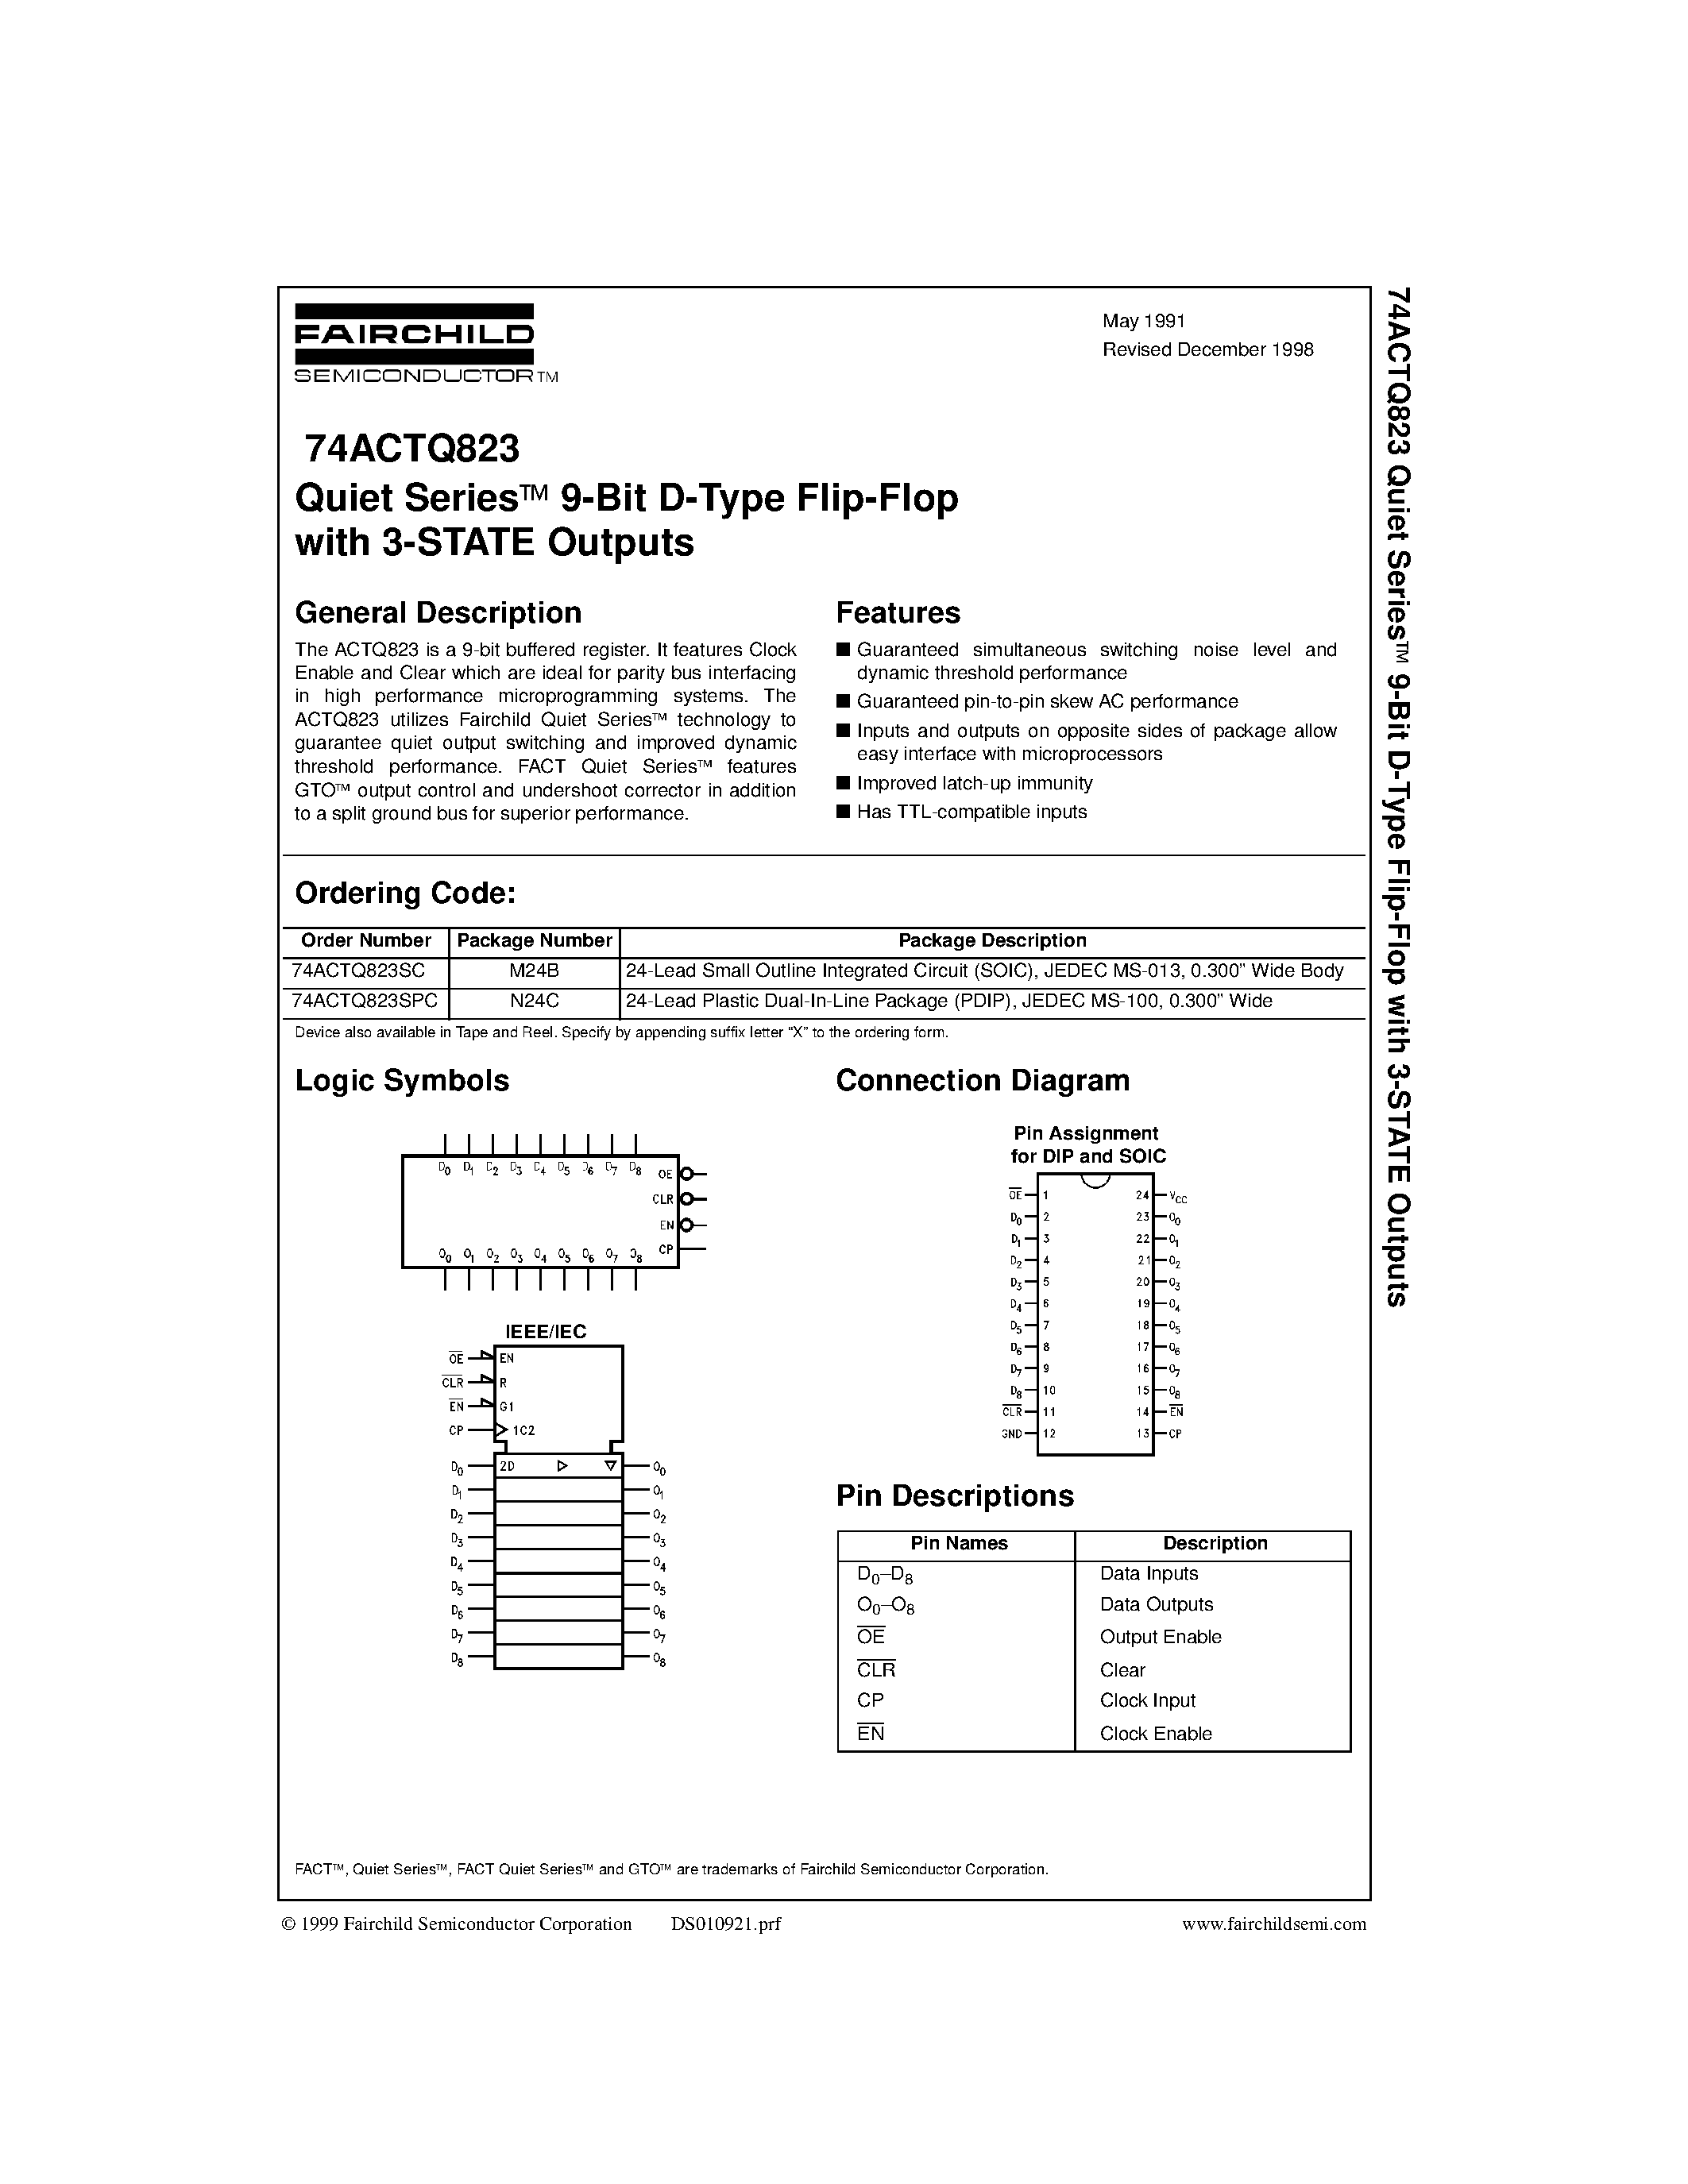 Даташит 74ACTQ823 - Quiet Seriesa 9-Bit D-Type Flip-Flop with 3-STATE Outputs страница 1